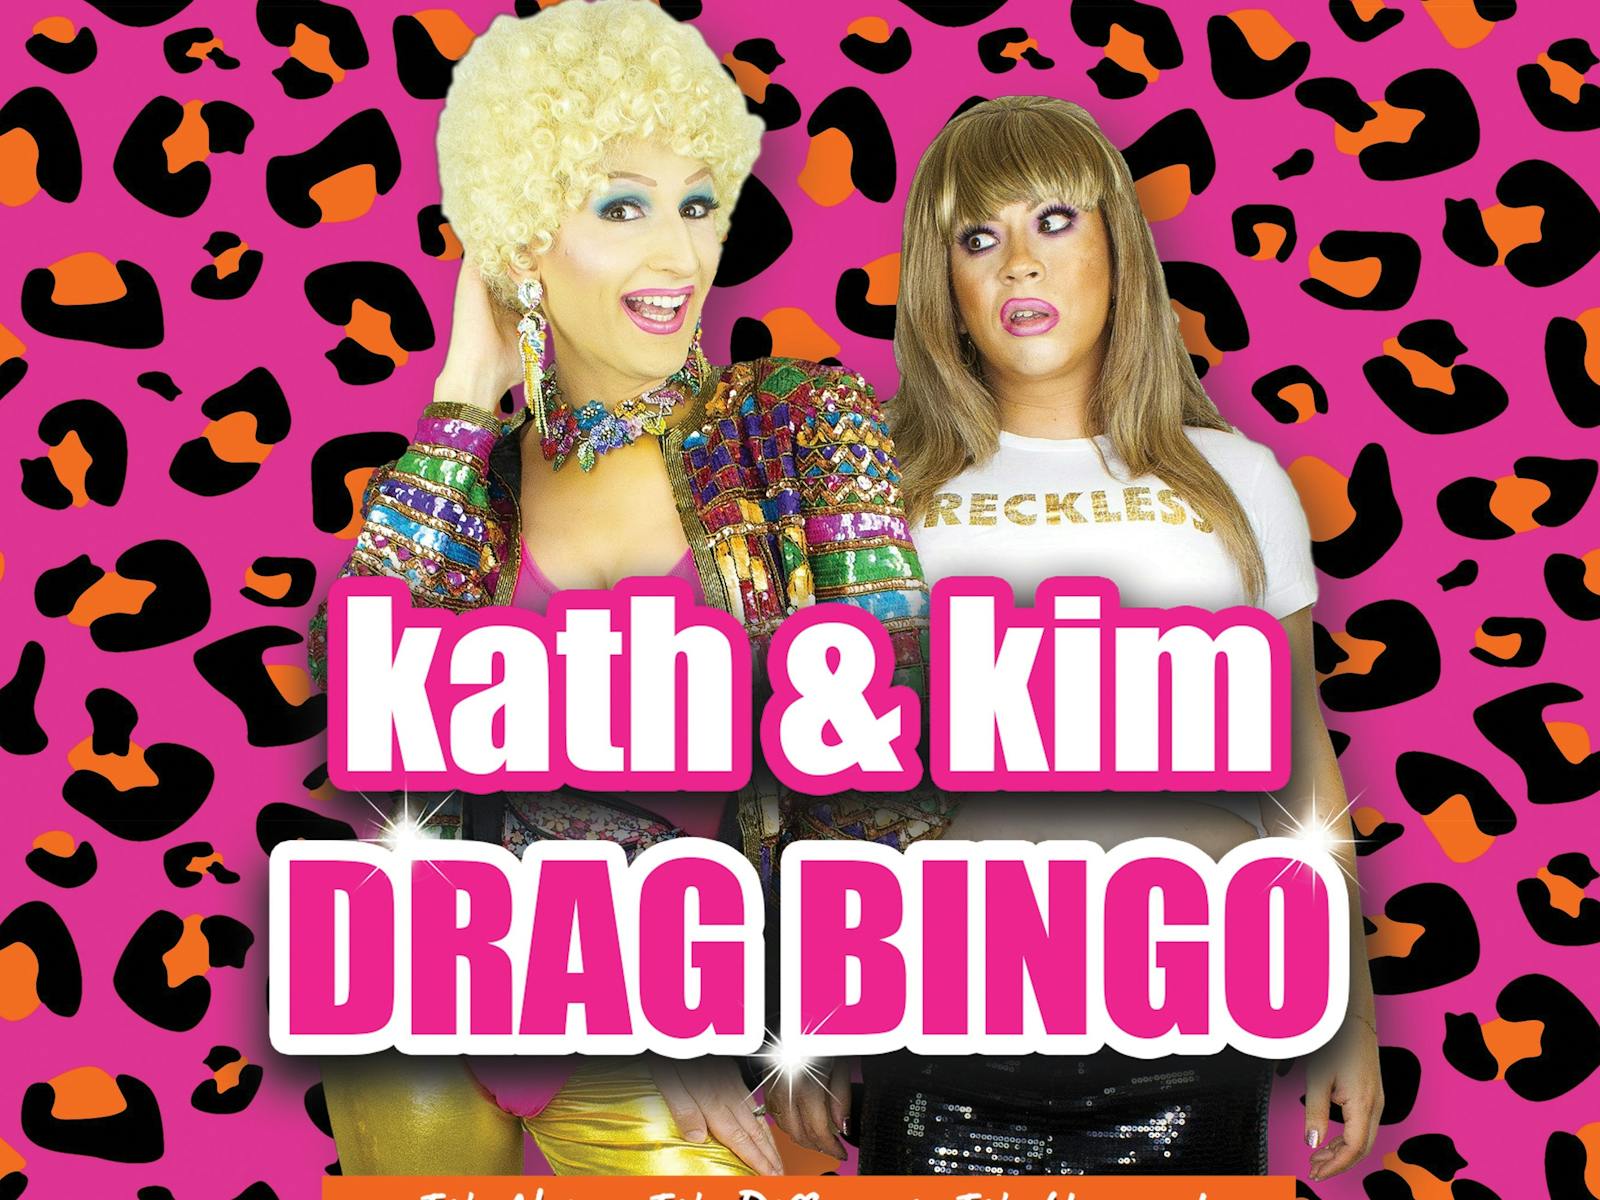 Image for Kath & Kim Drag Bingo at Camden Civic Centre